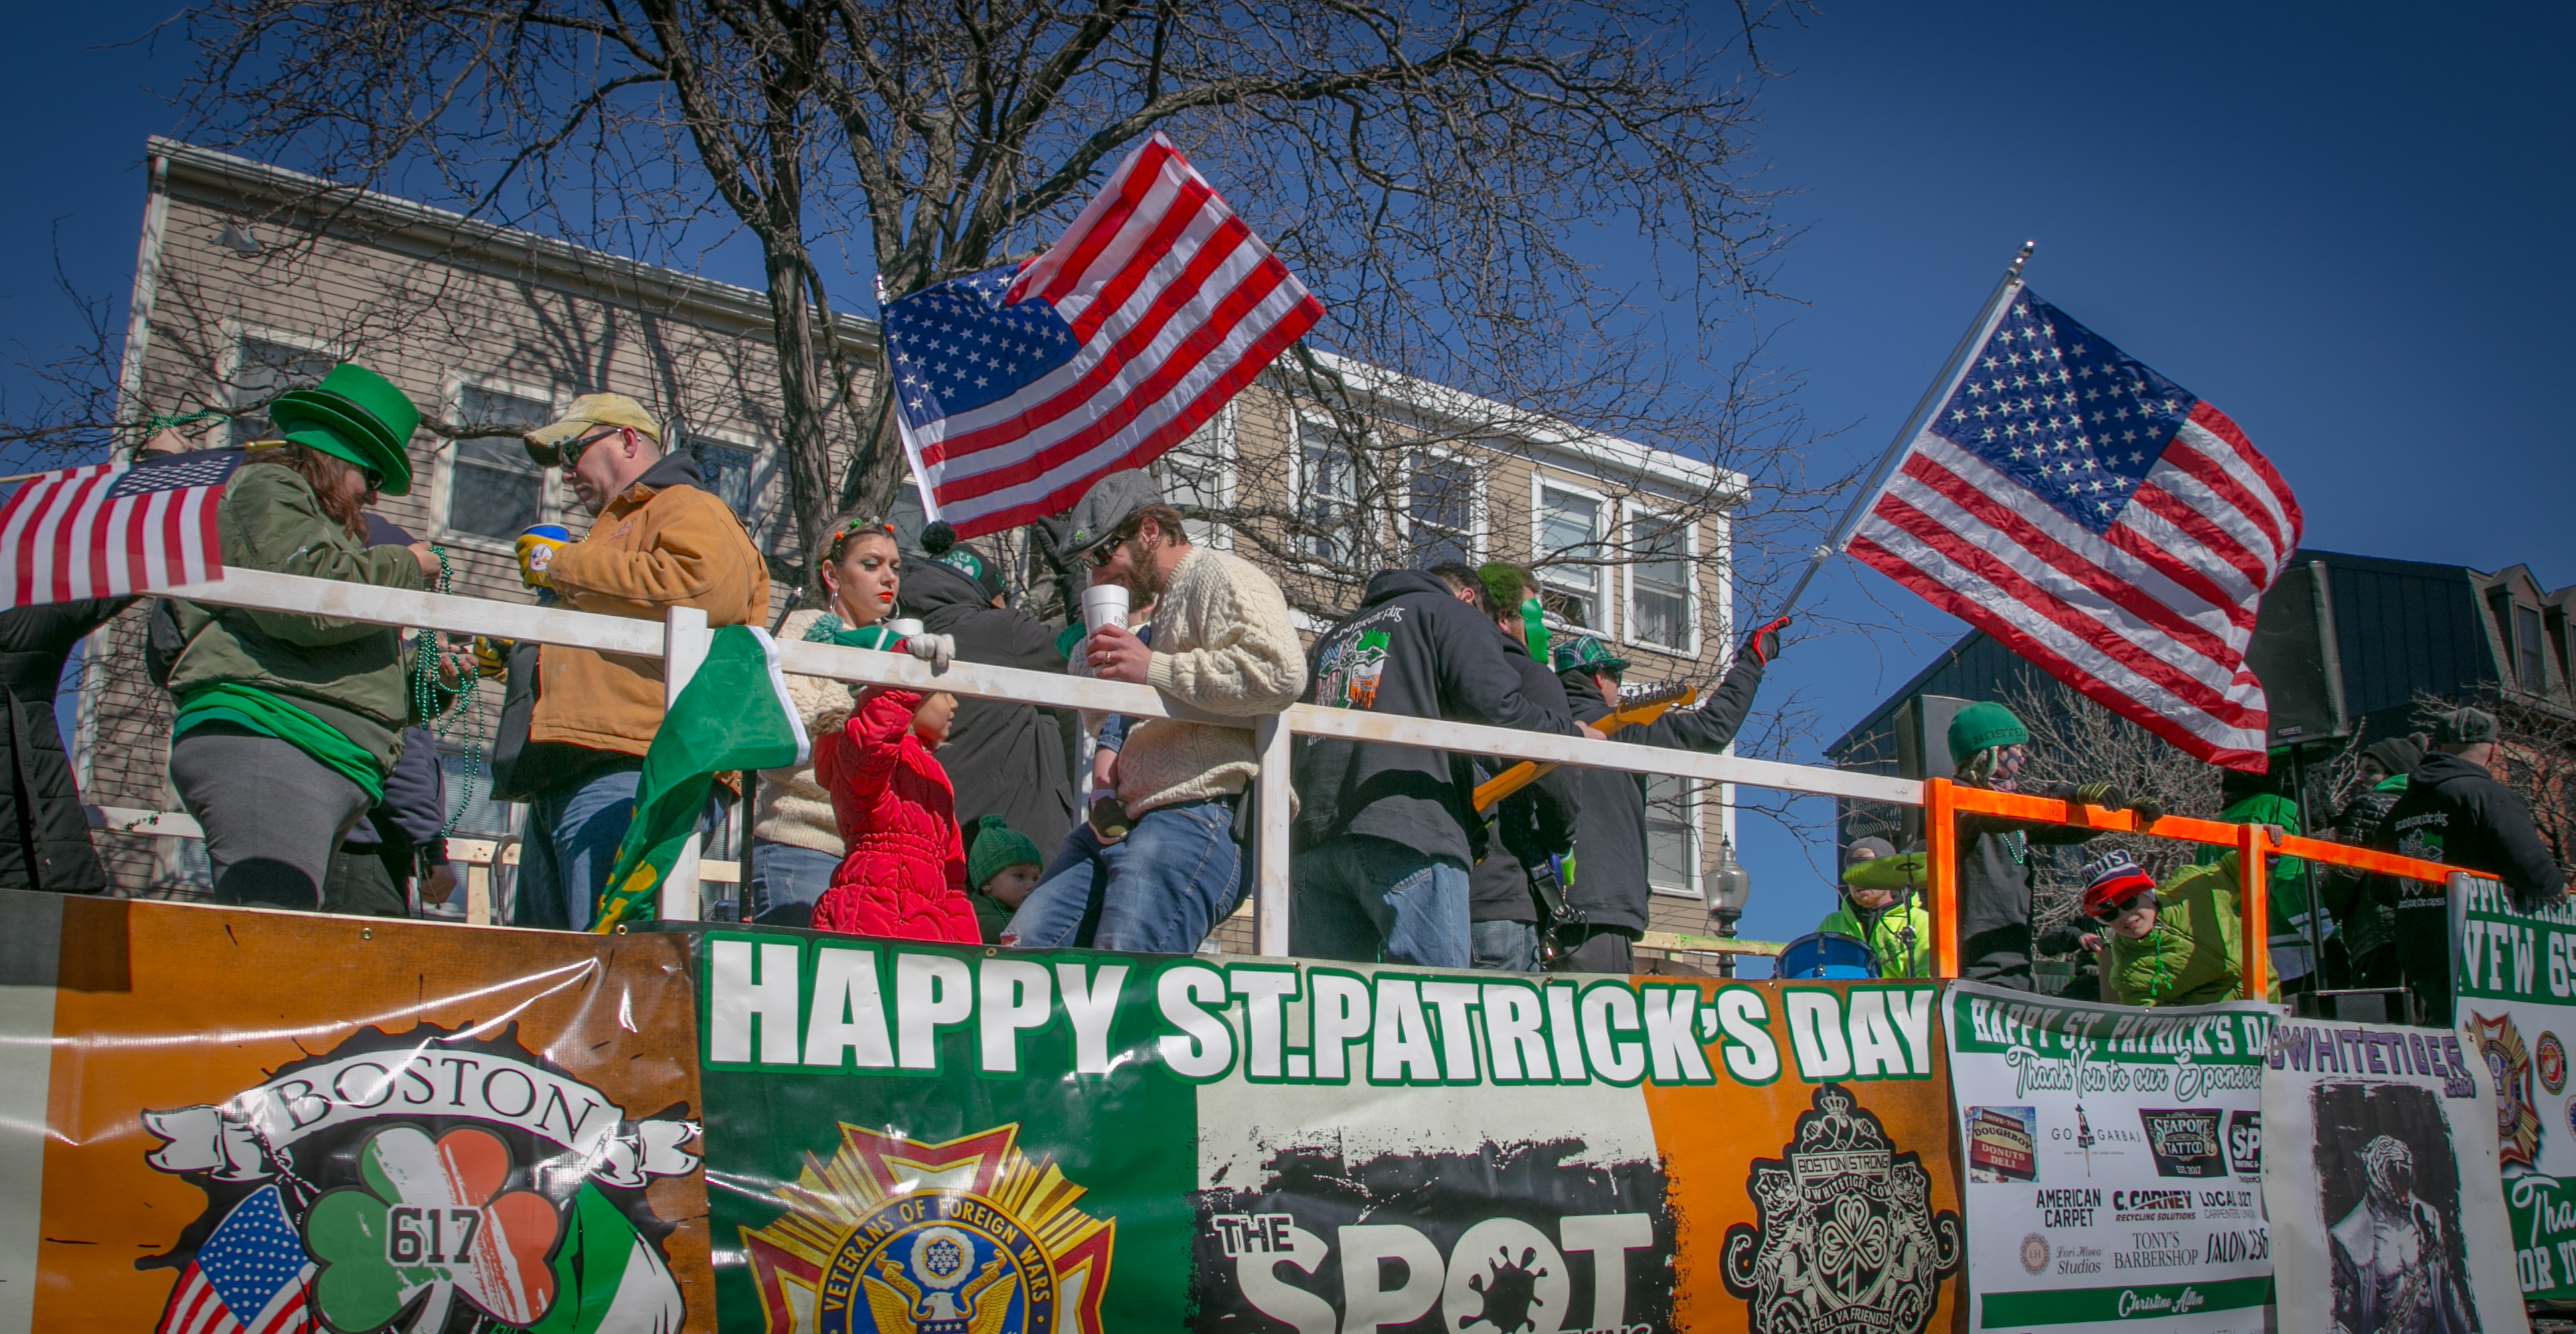 Boston celebrates St. Patrick’s Day with annual parade The Huntington